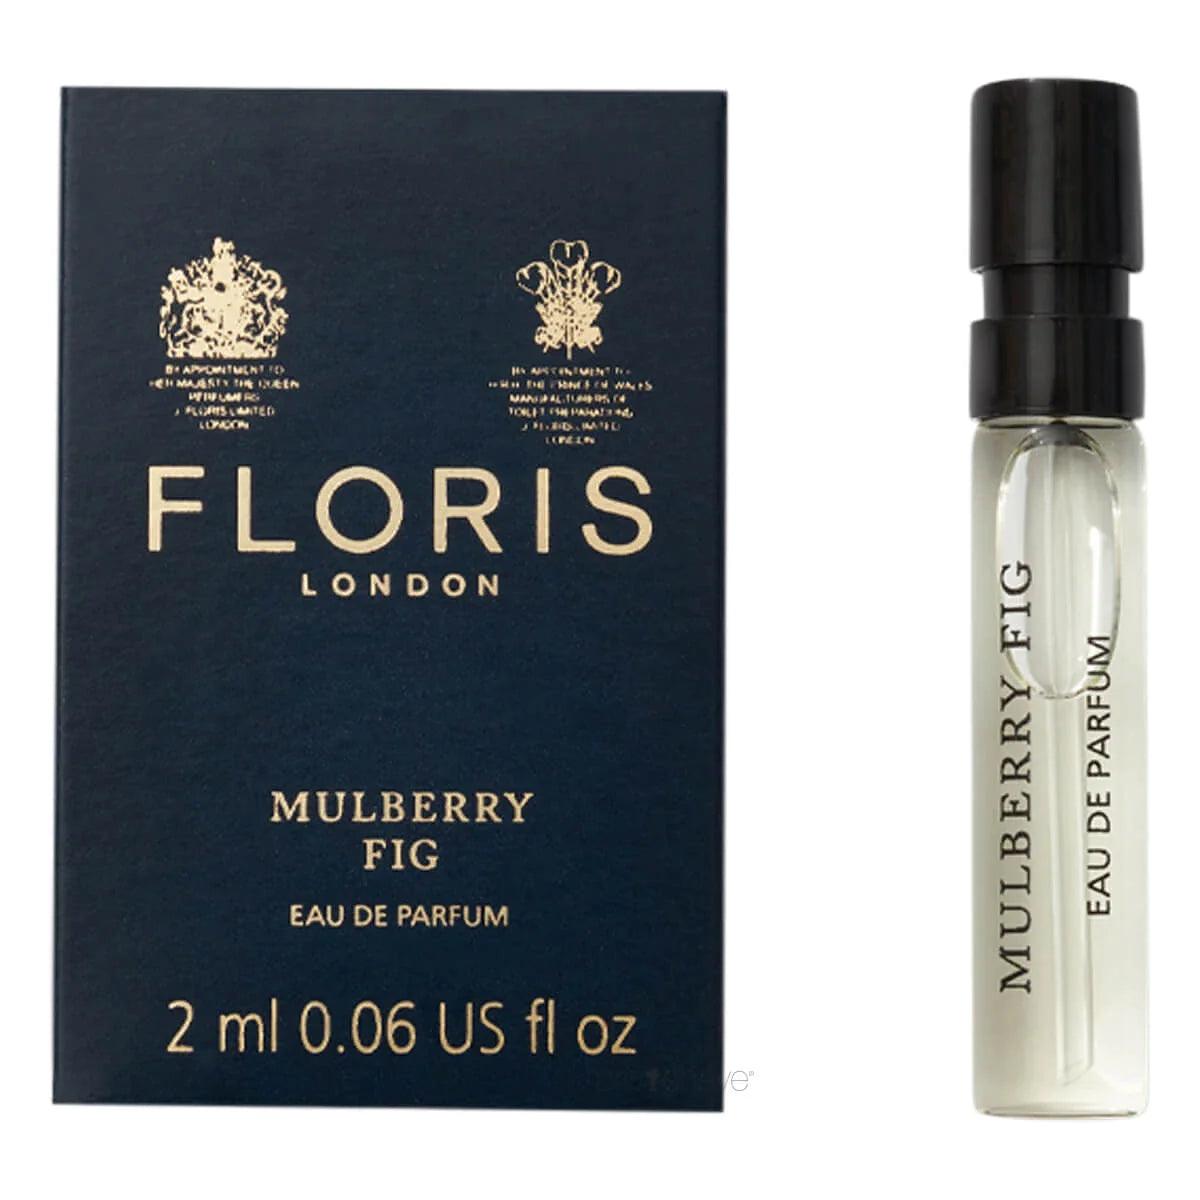 Floris Mulberry Fig, Eau de Parfum, 2 ml | Parfyme | Floris London | JK SHOP | JK Barber og herre frisør | Lavepriser | Best